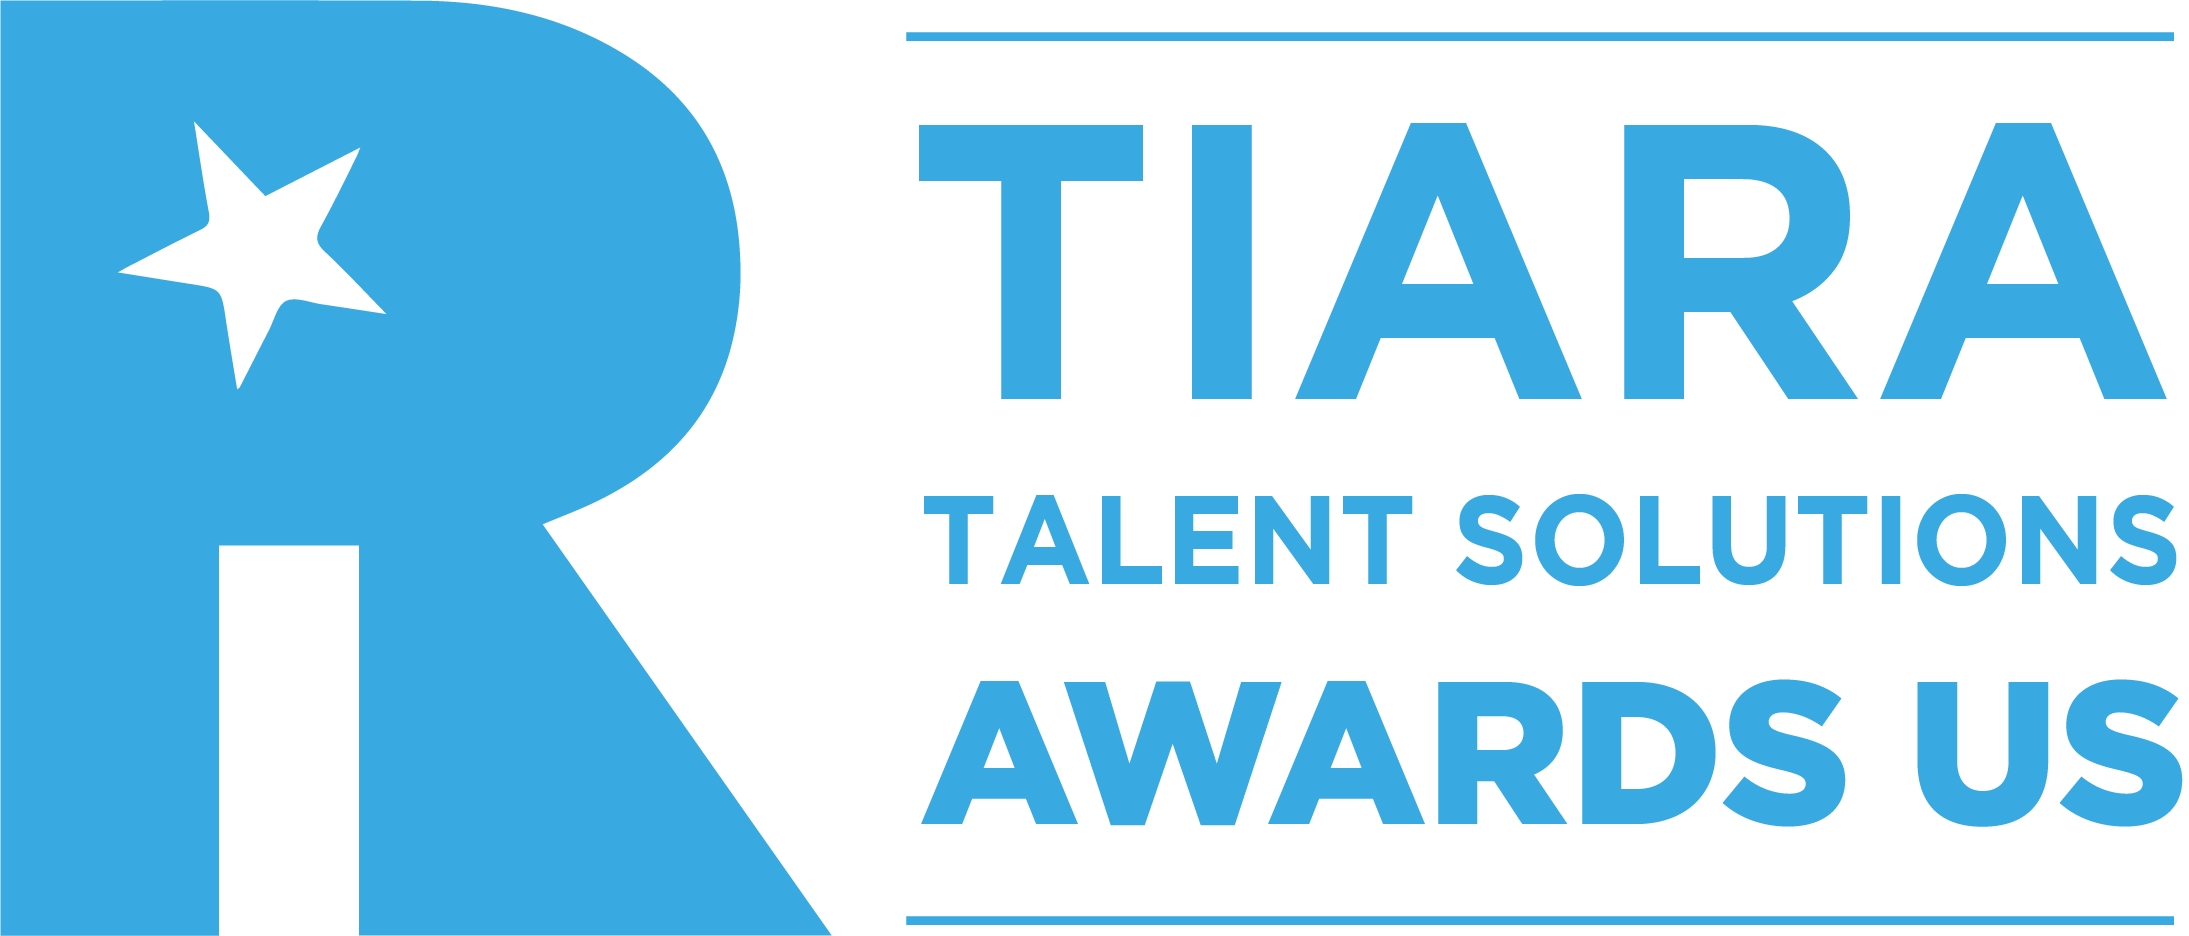 Tiara talent solutions awards US